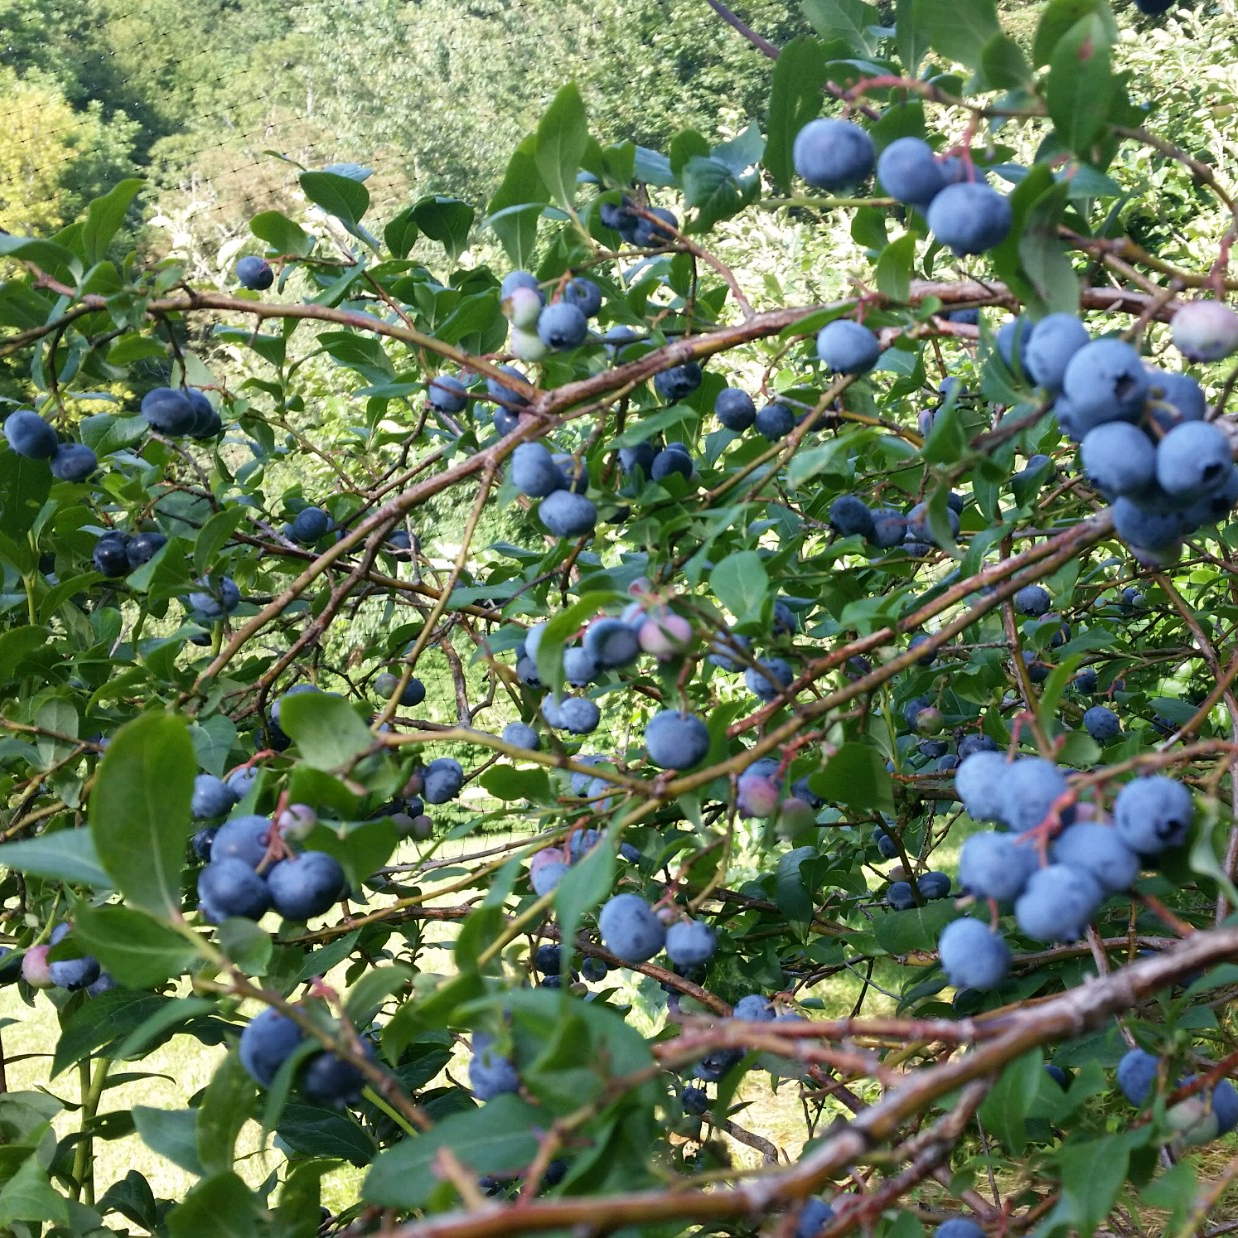 J&D Blueberry Farm